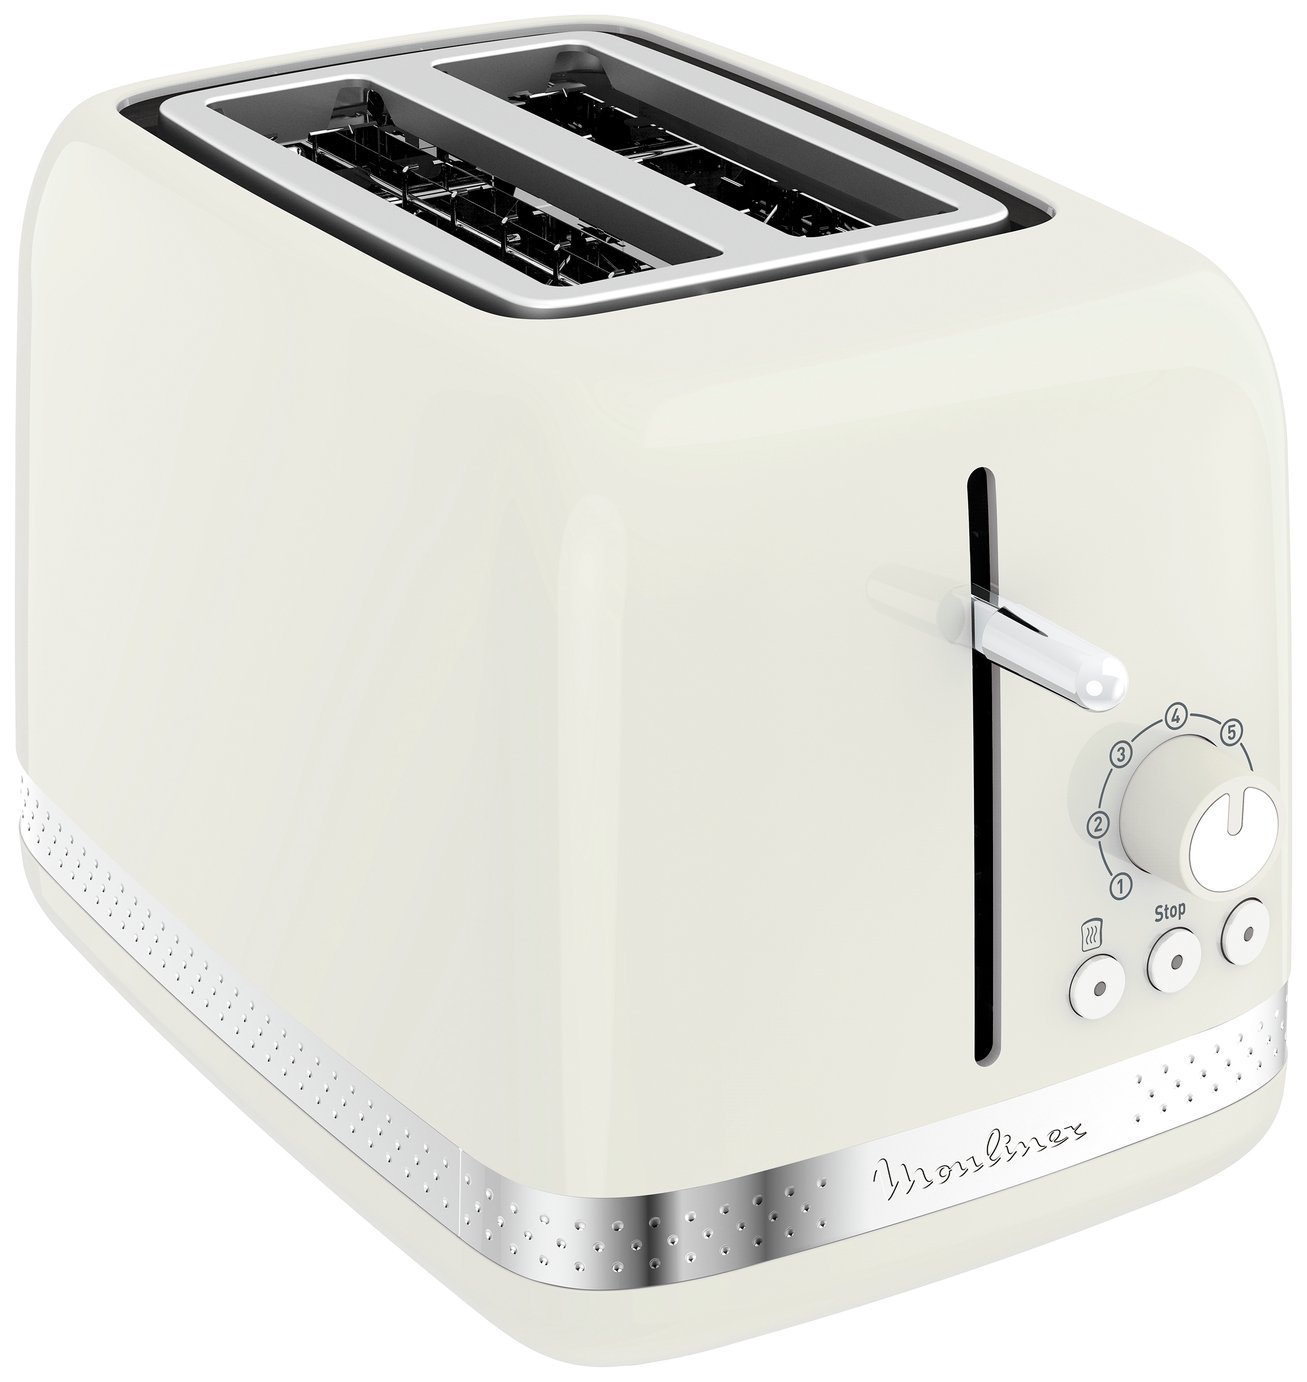 Moulinex LT300A41 2 Slice Toaster review